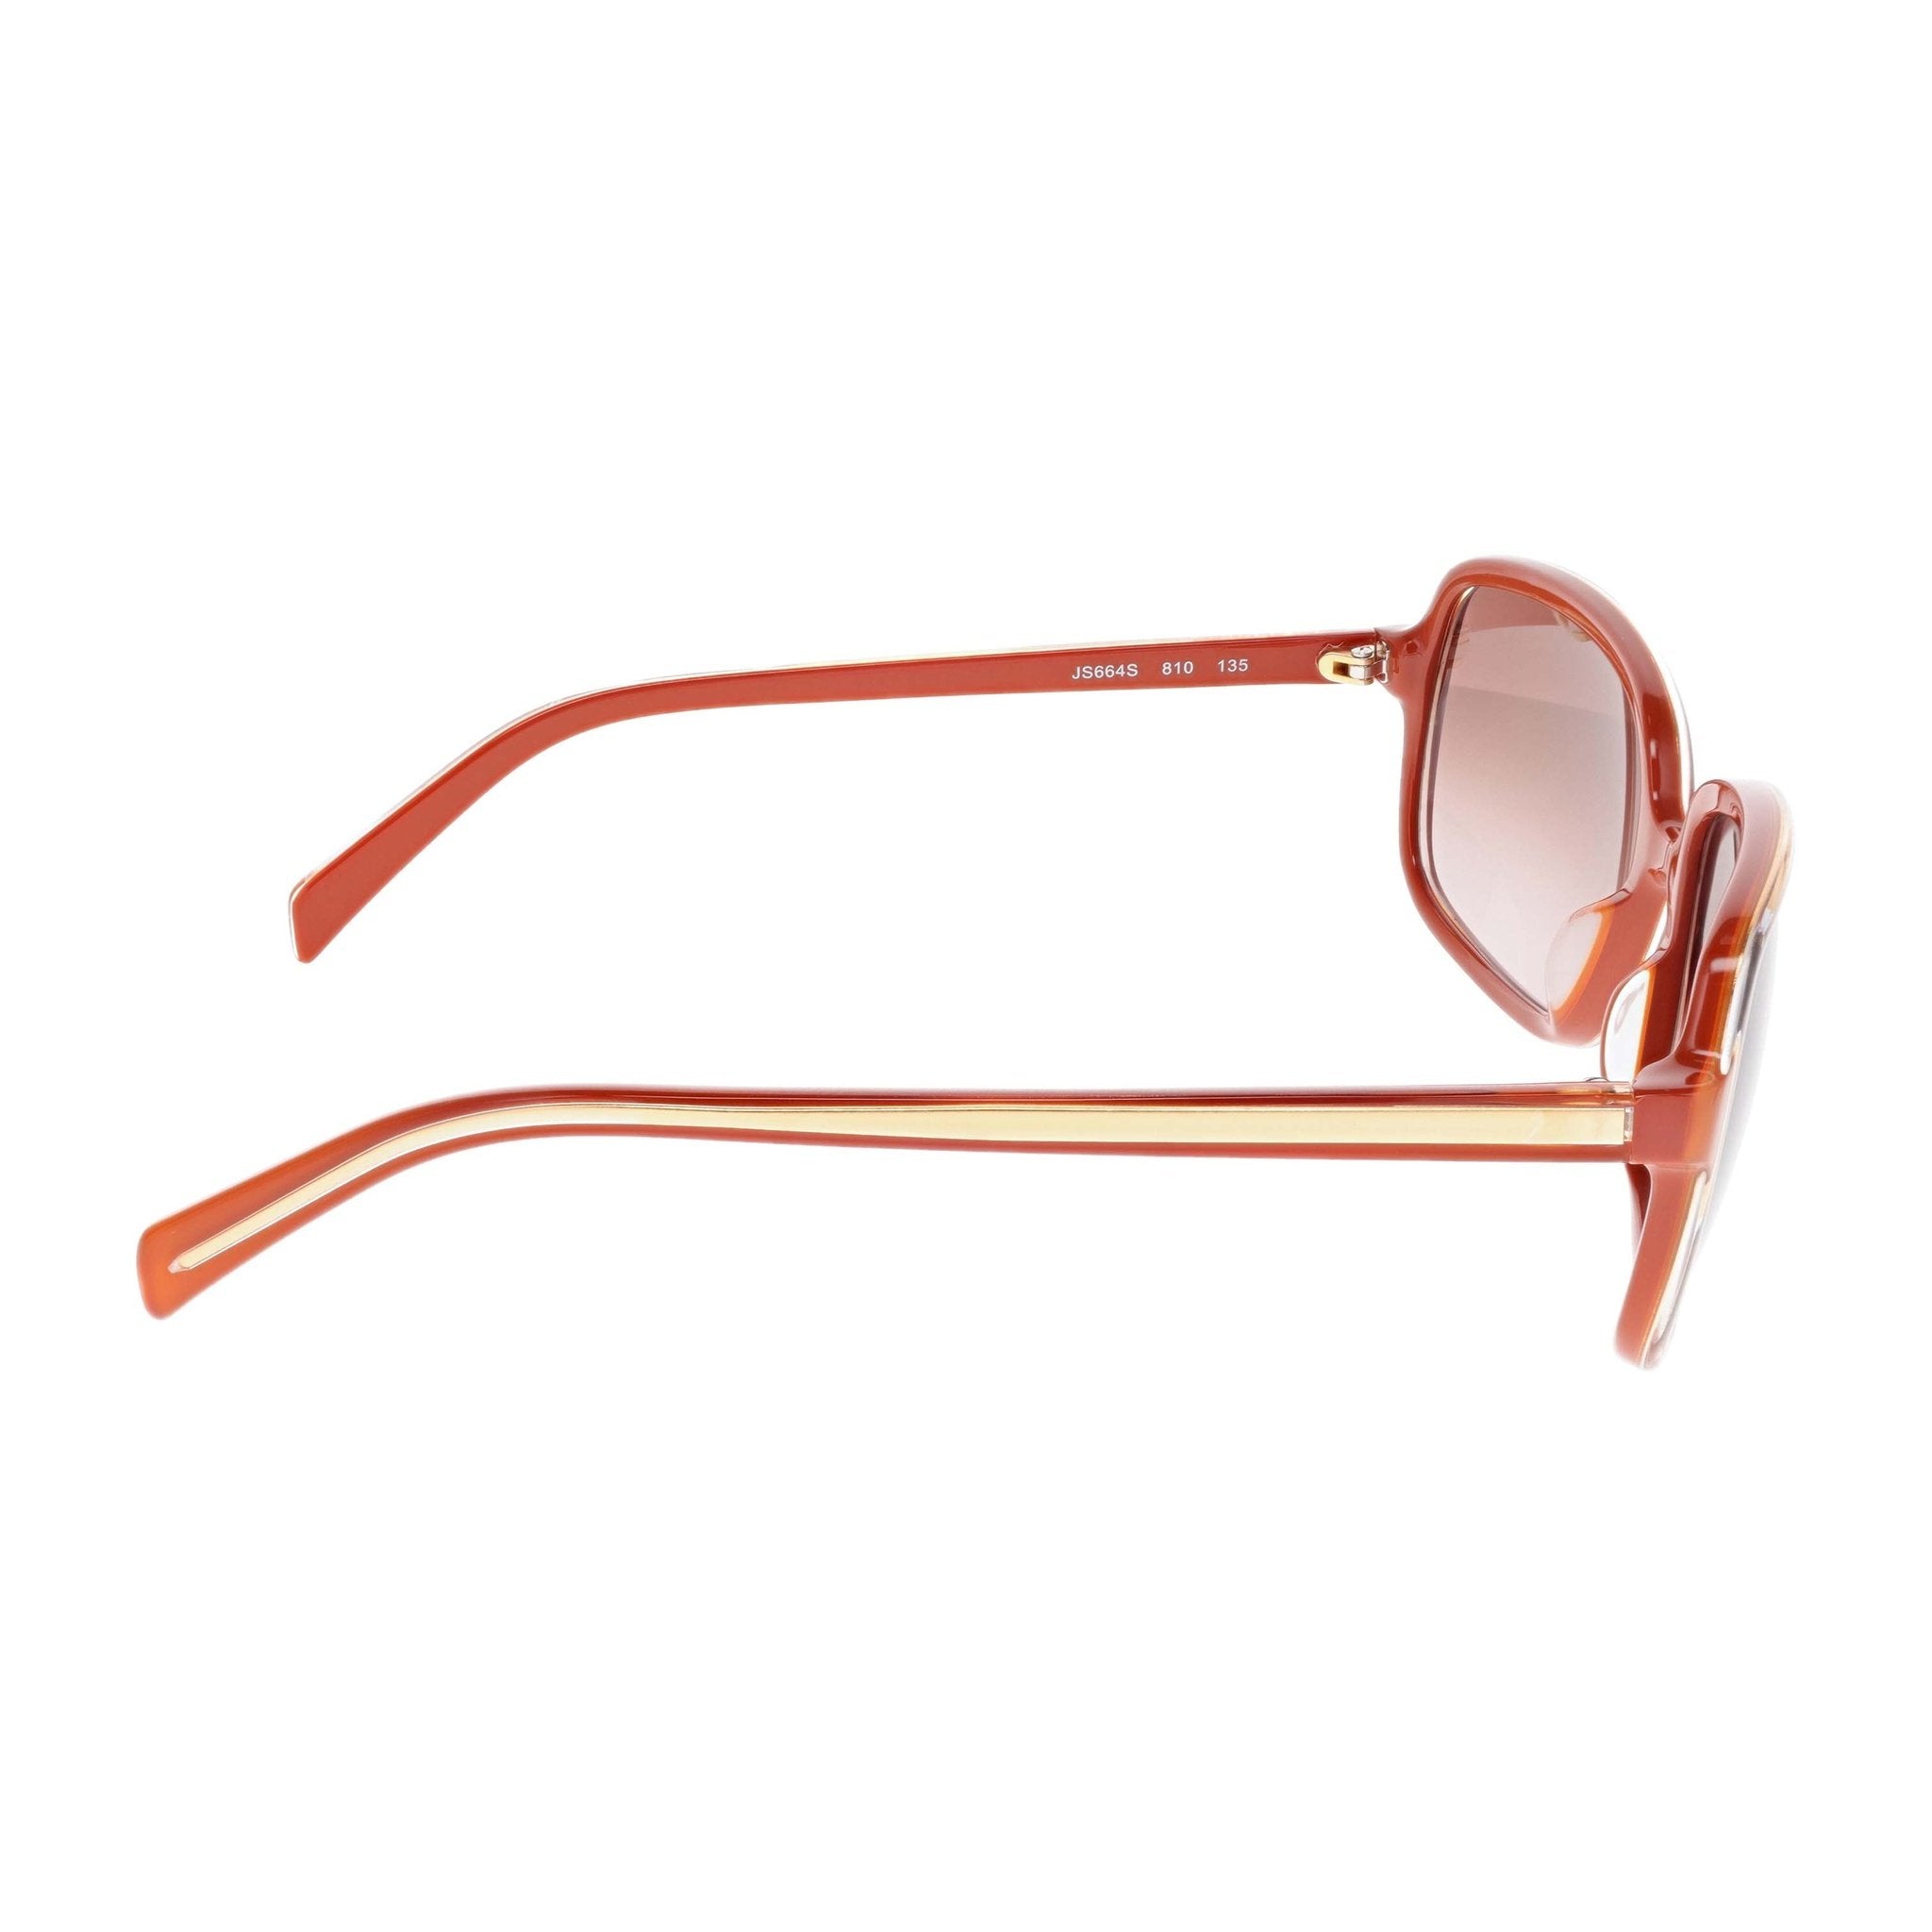 Jil Sander Sunglasses - JS664S - Orange